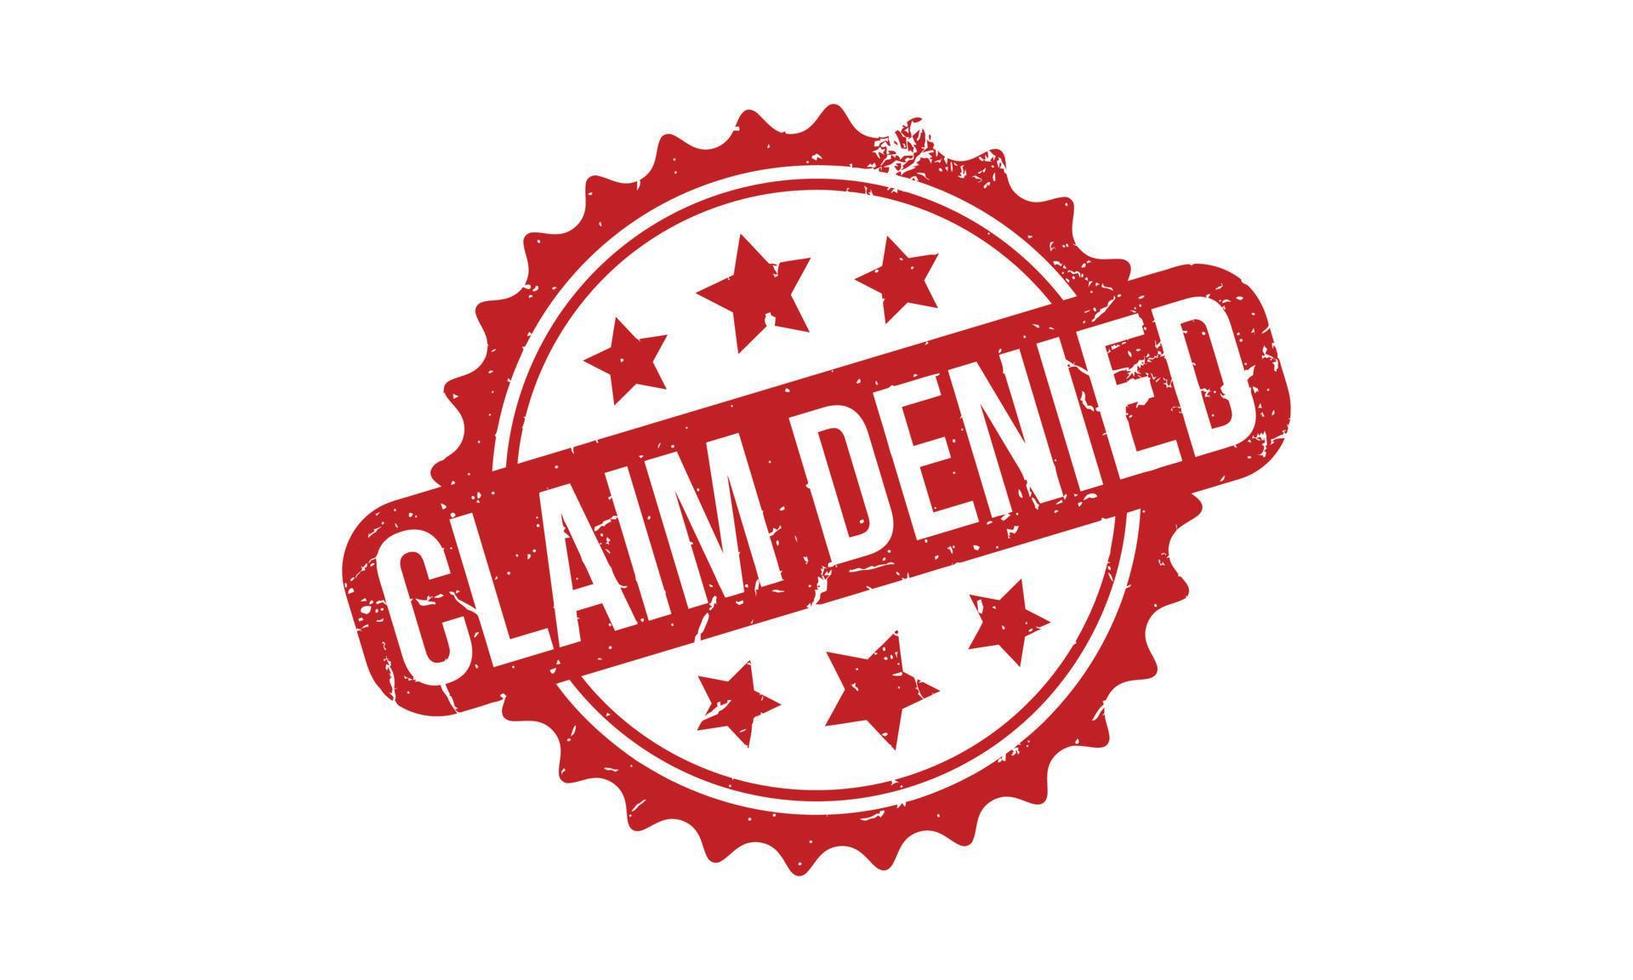 Claim Denied Rubber Stamp. Claim Denied Rubber Grunge Stamp Seal Vector Illustration